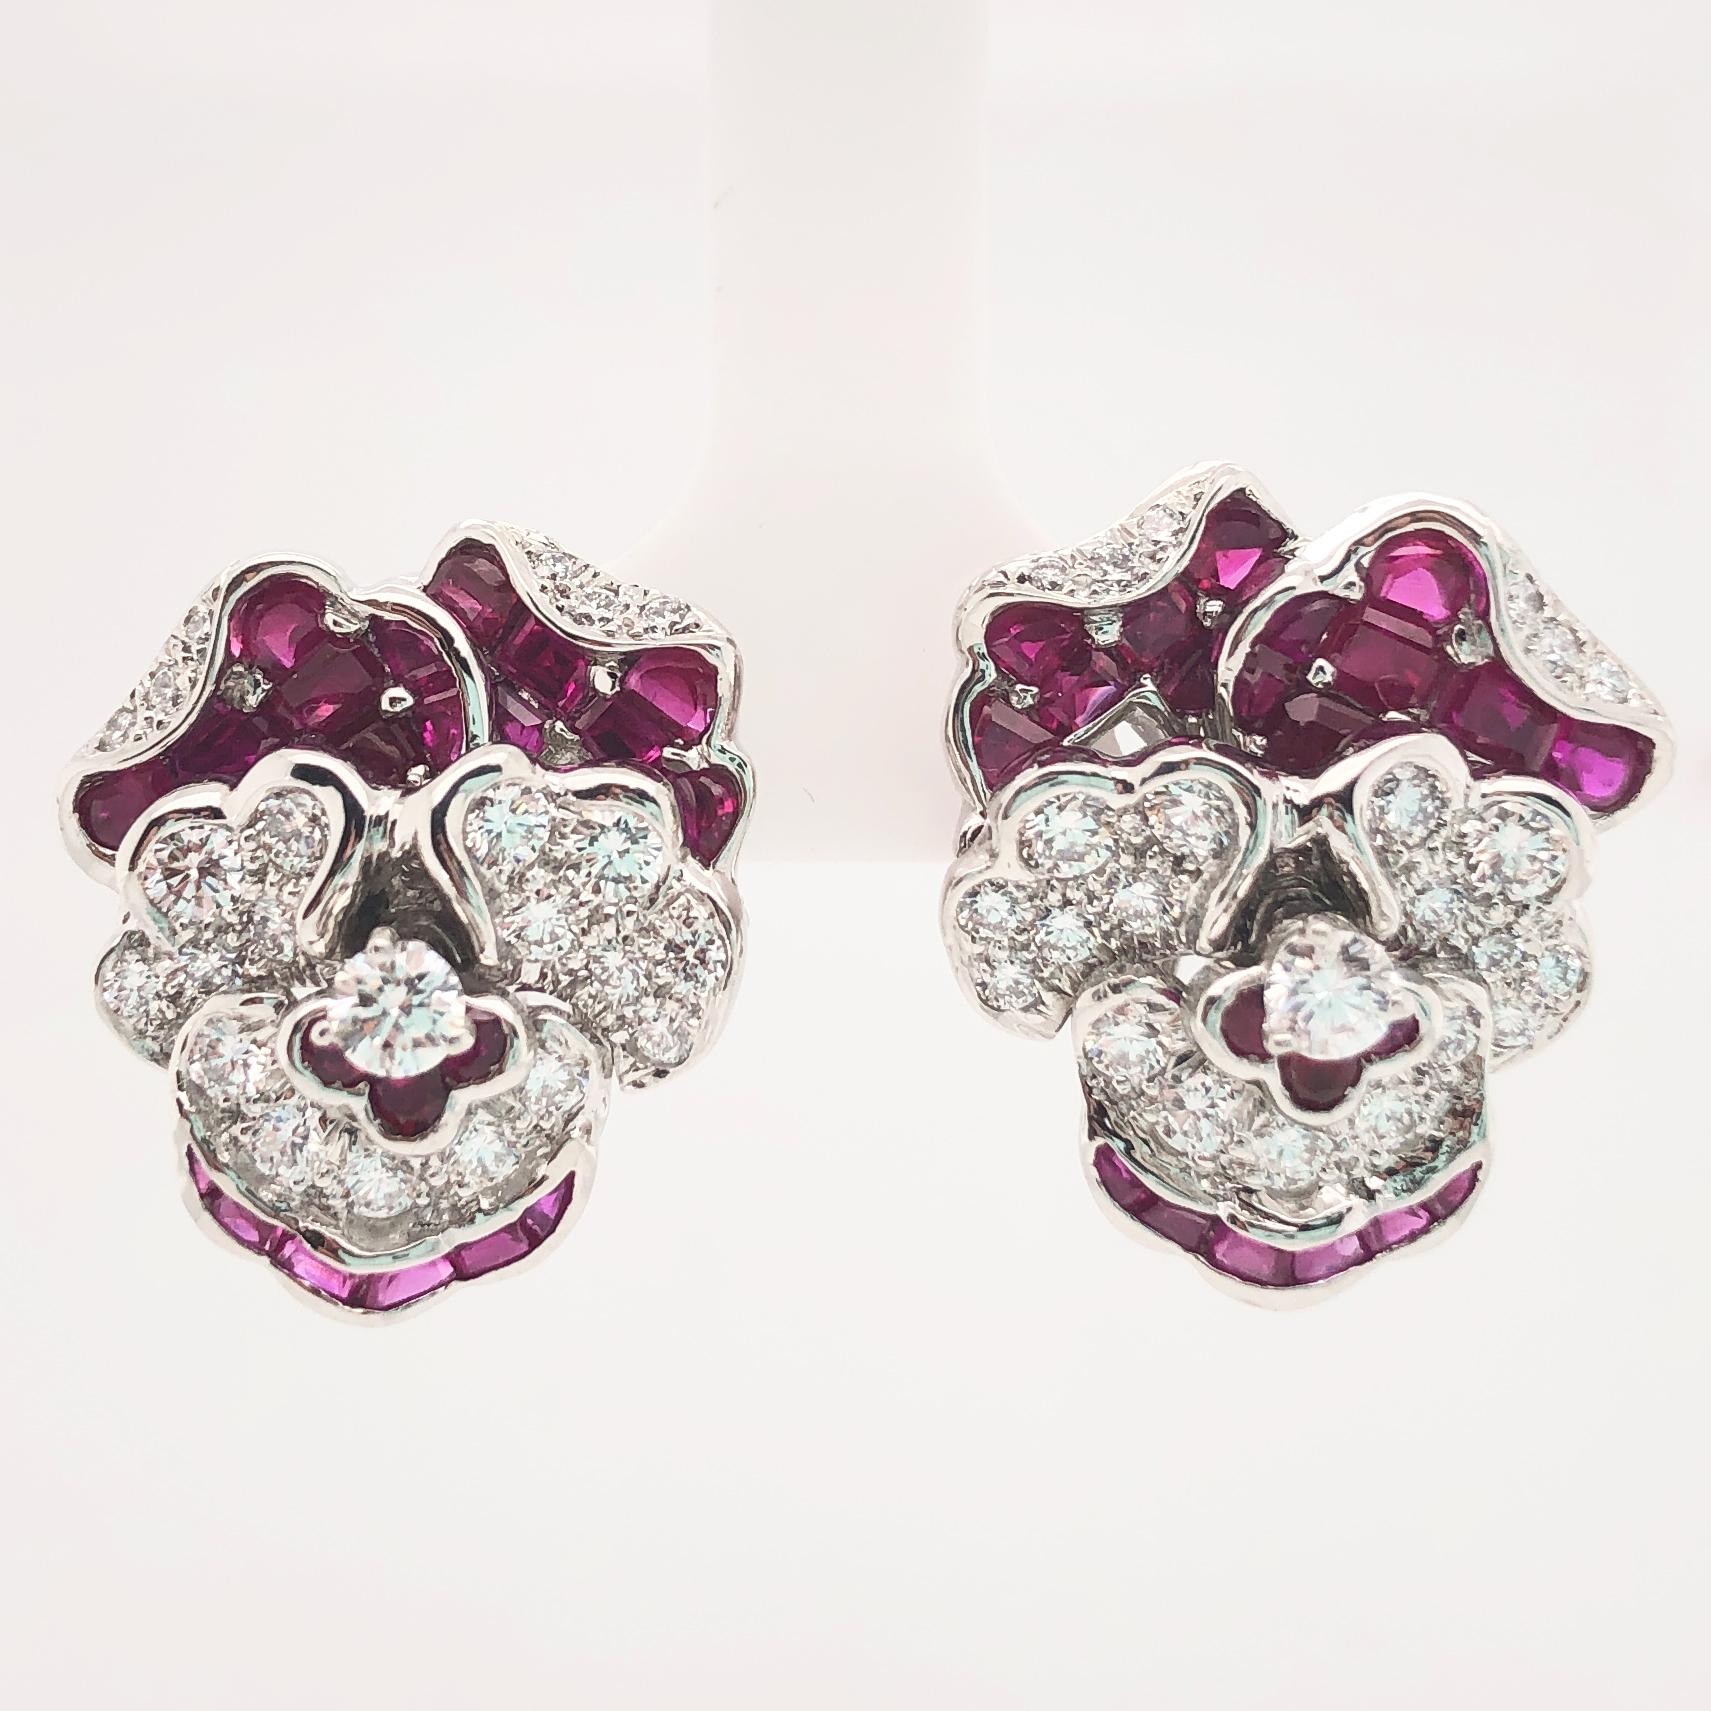 Contemporary Oscar Heyman Diamond and Ruby Pansy Clip Earrings